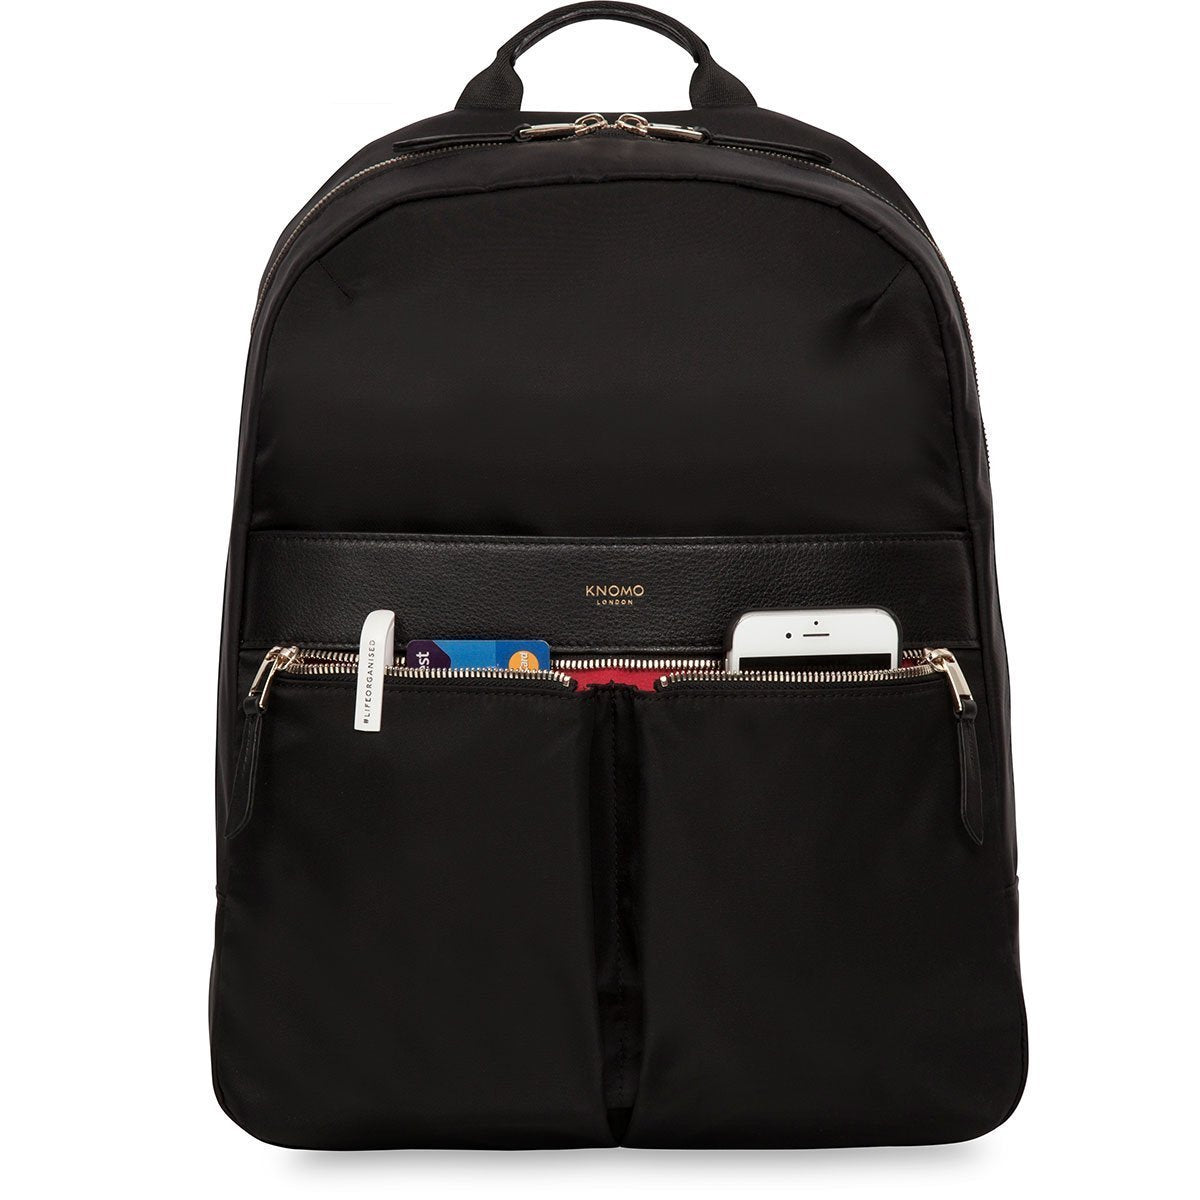 Beauchamp Laptop Backpack - 14